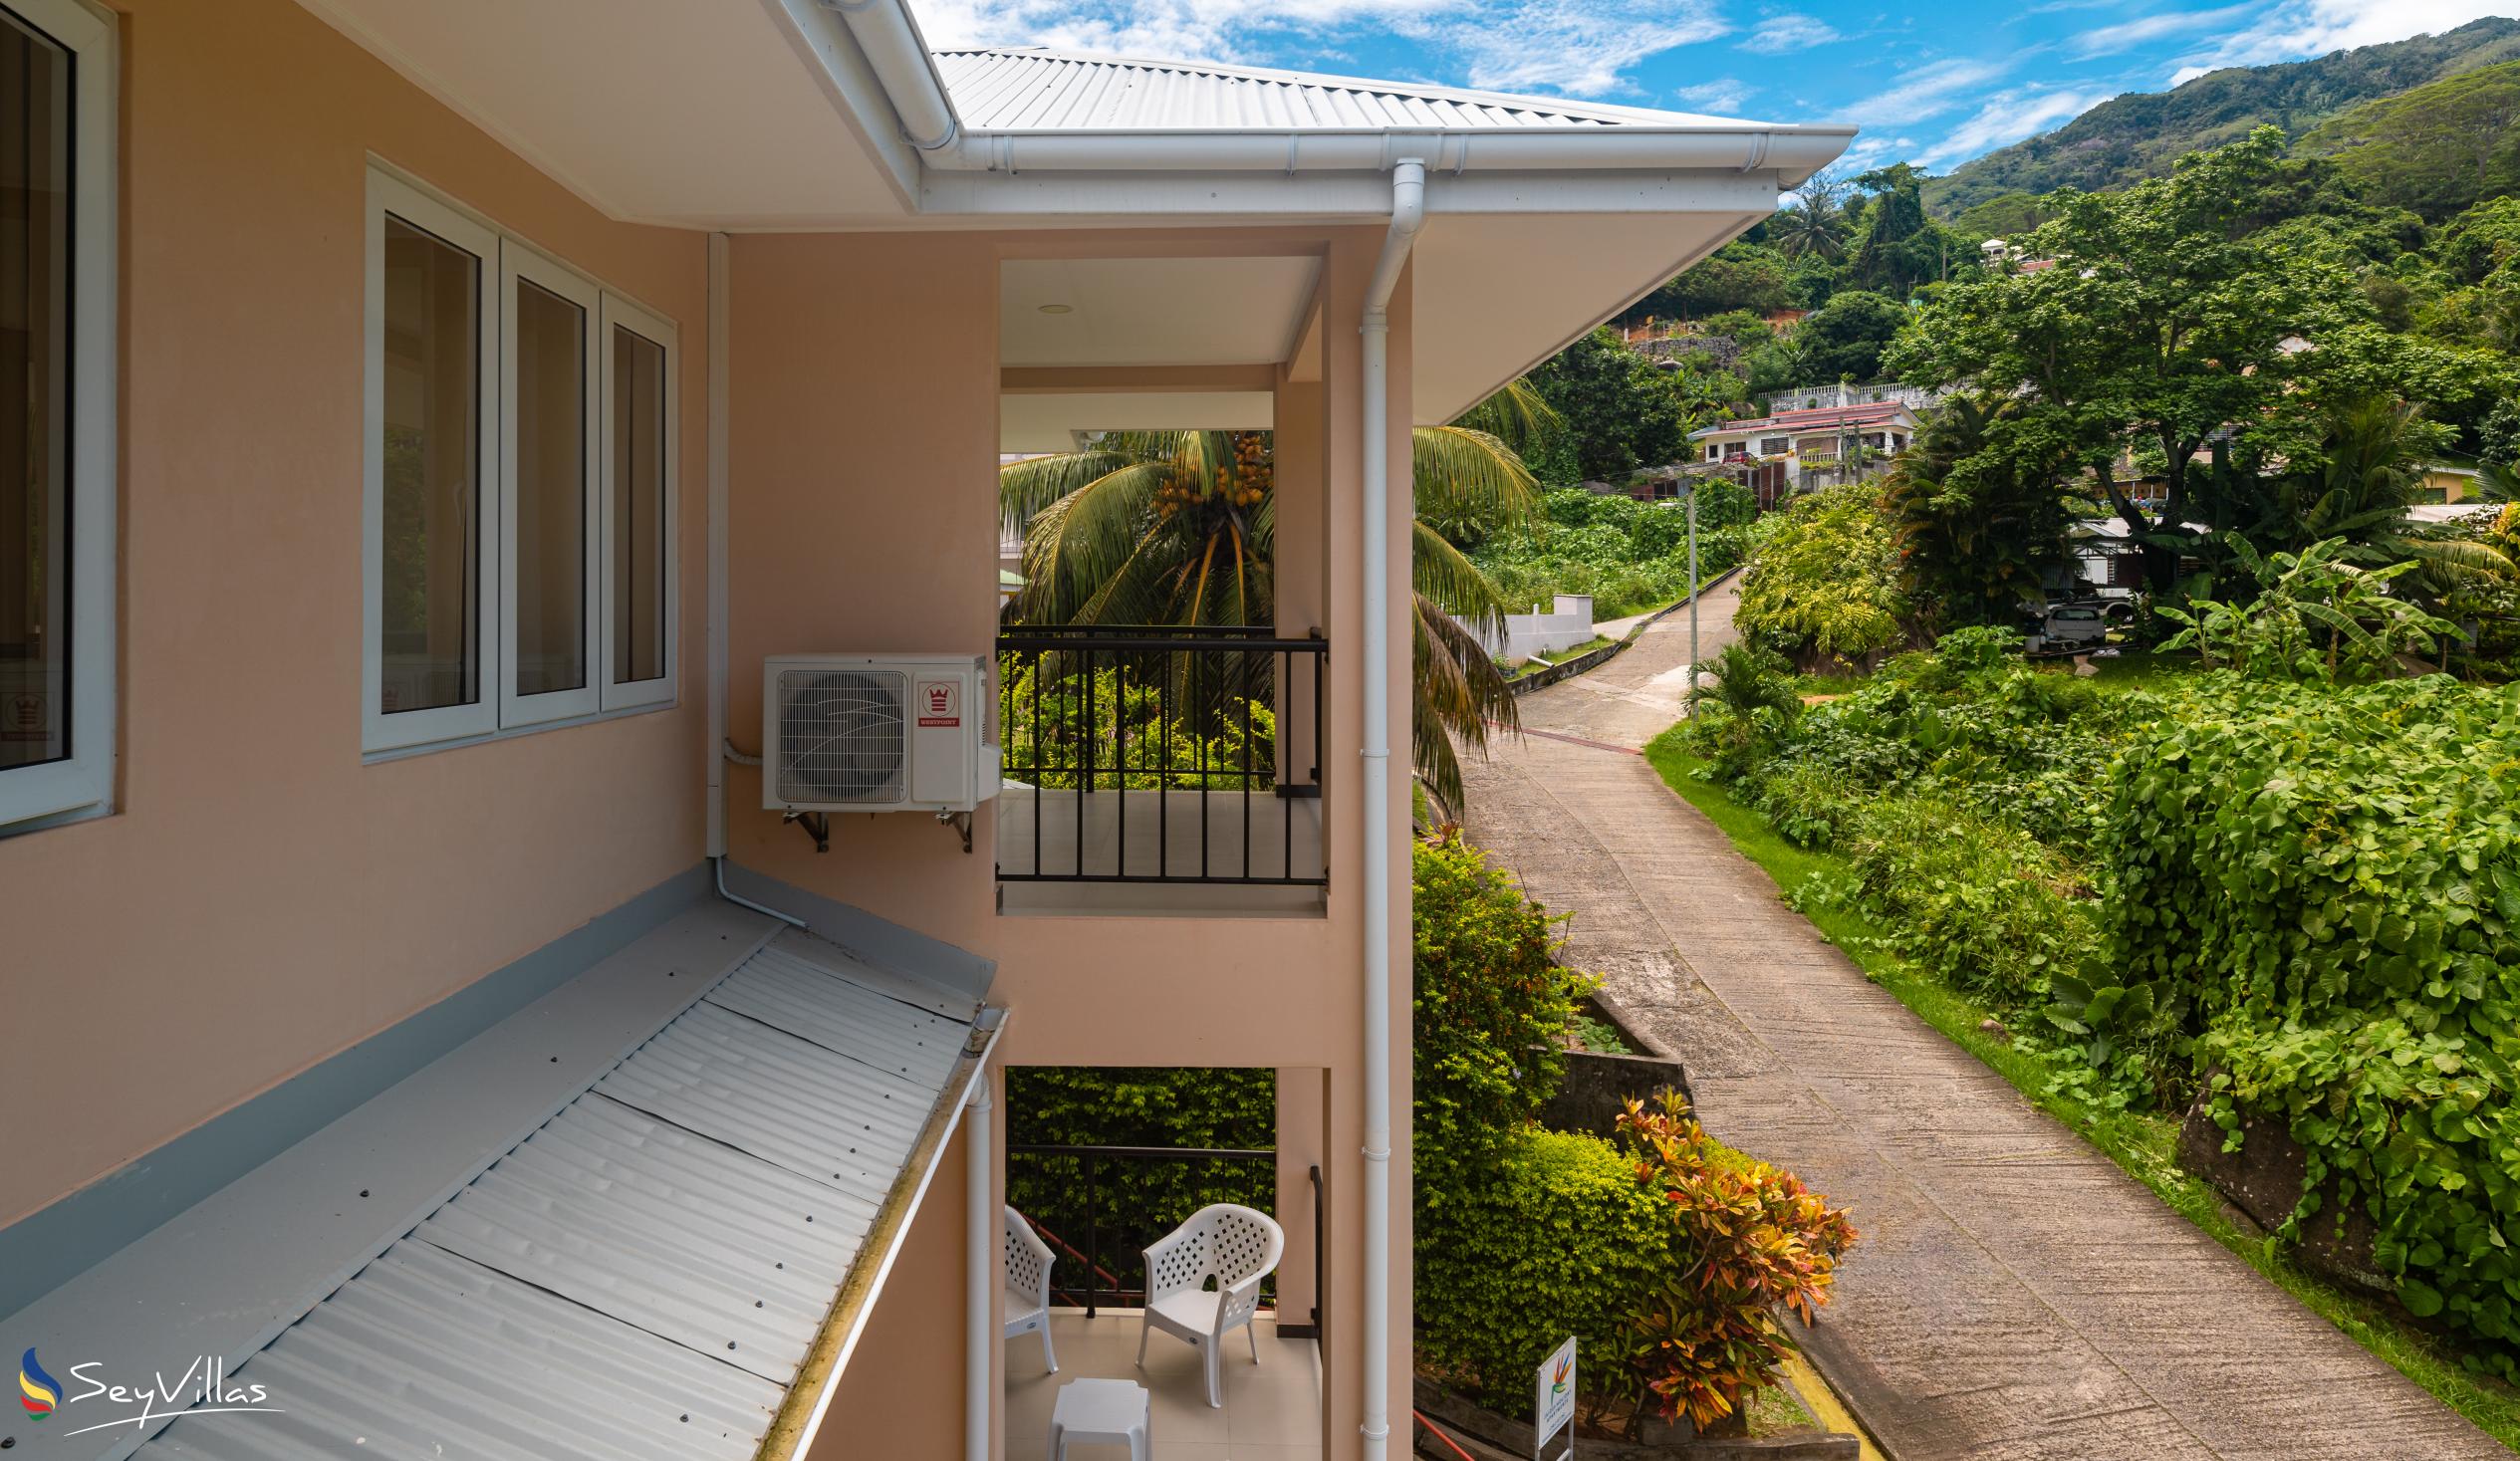 Foto 12: JAIDSS Holiday Apartments - Aussenbereich - Mahé (Seychellen)